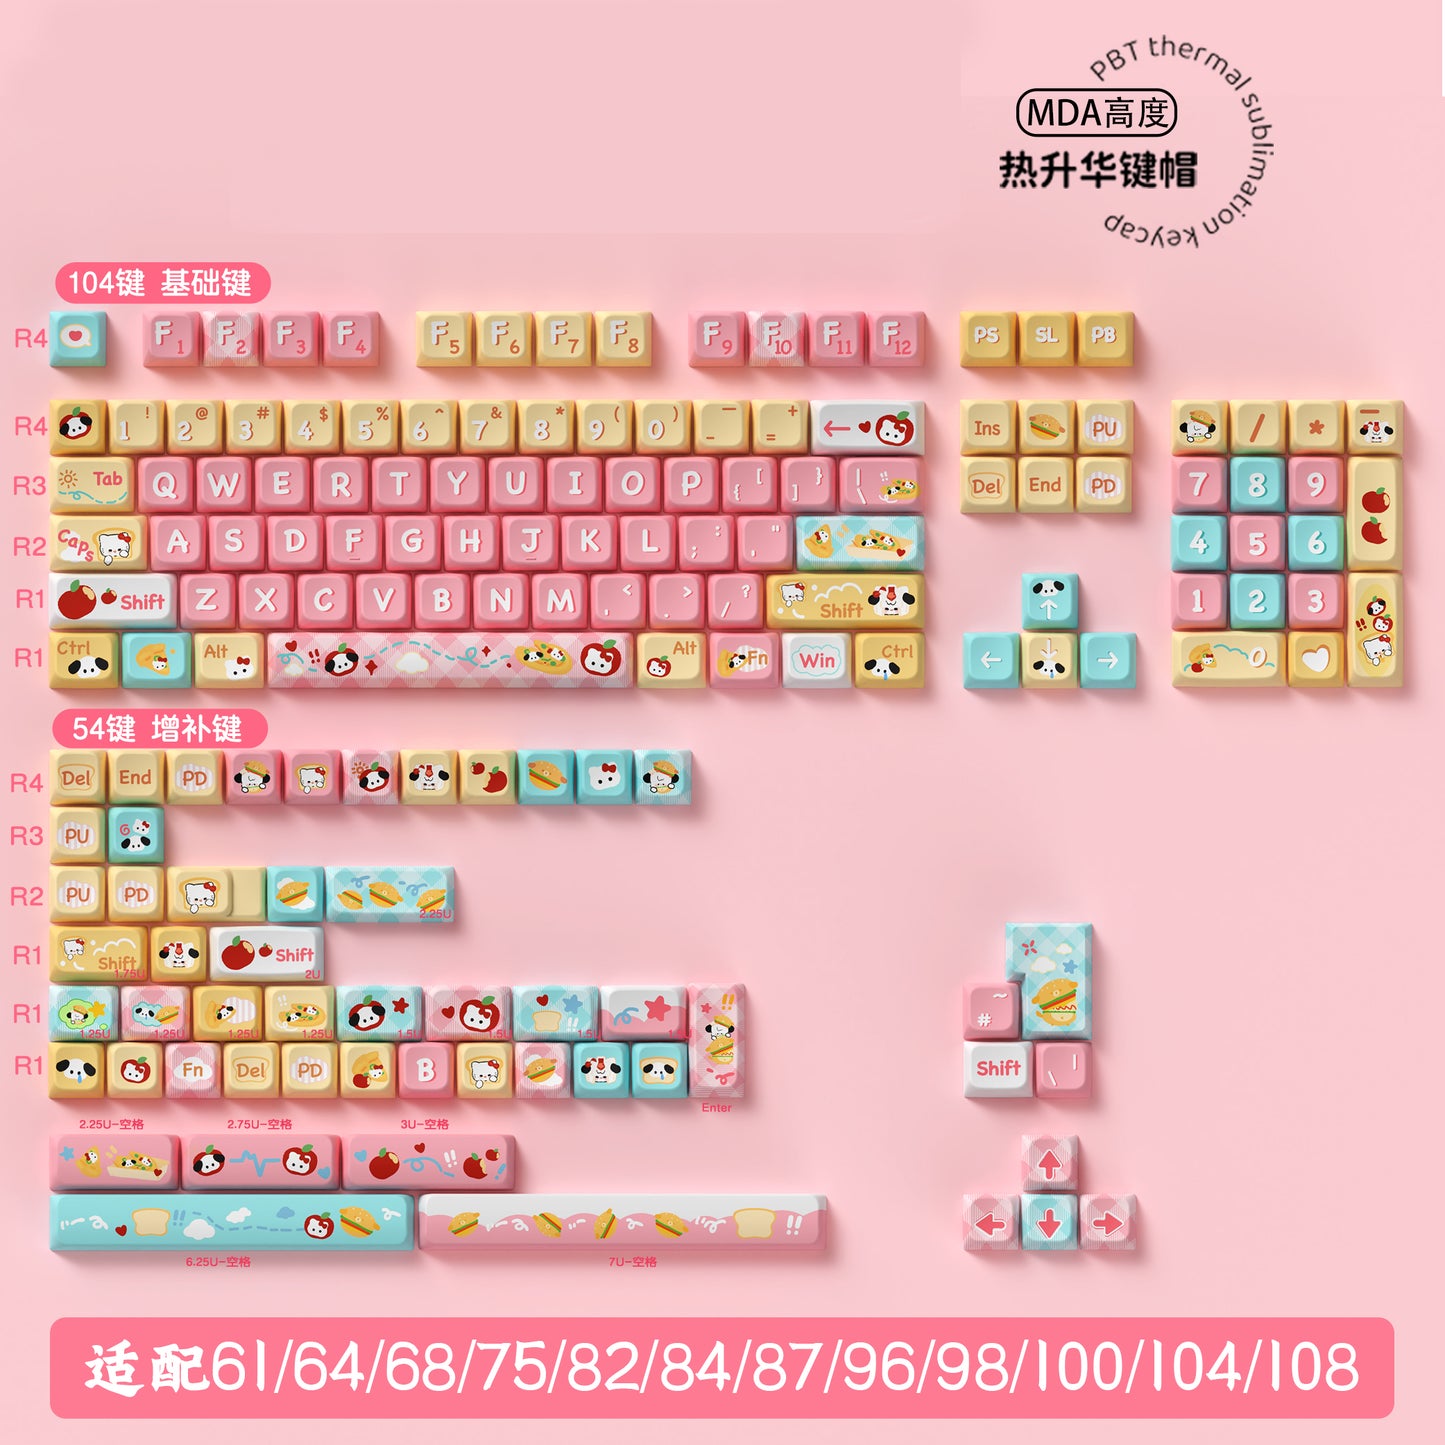 Bread Puppy (Pink/Yellow) Cute Keycap Set, MDA/Cherry Profile, PBT Dye Sub Key Cap